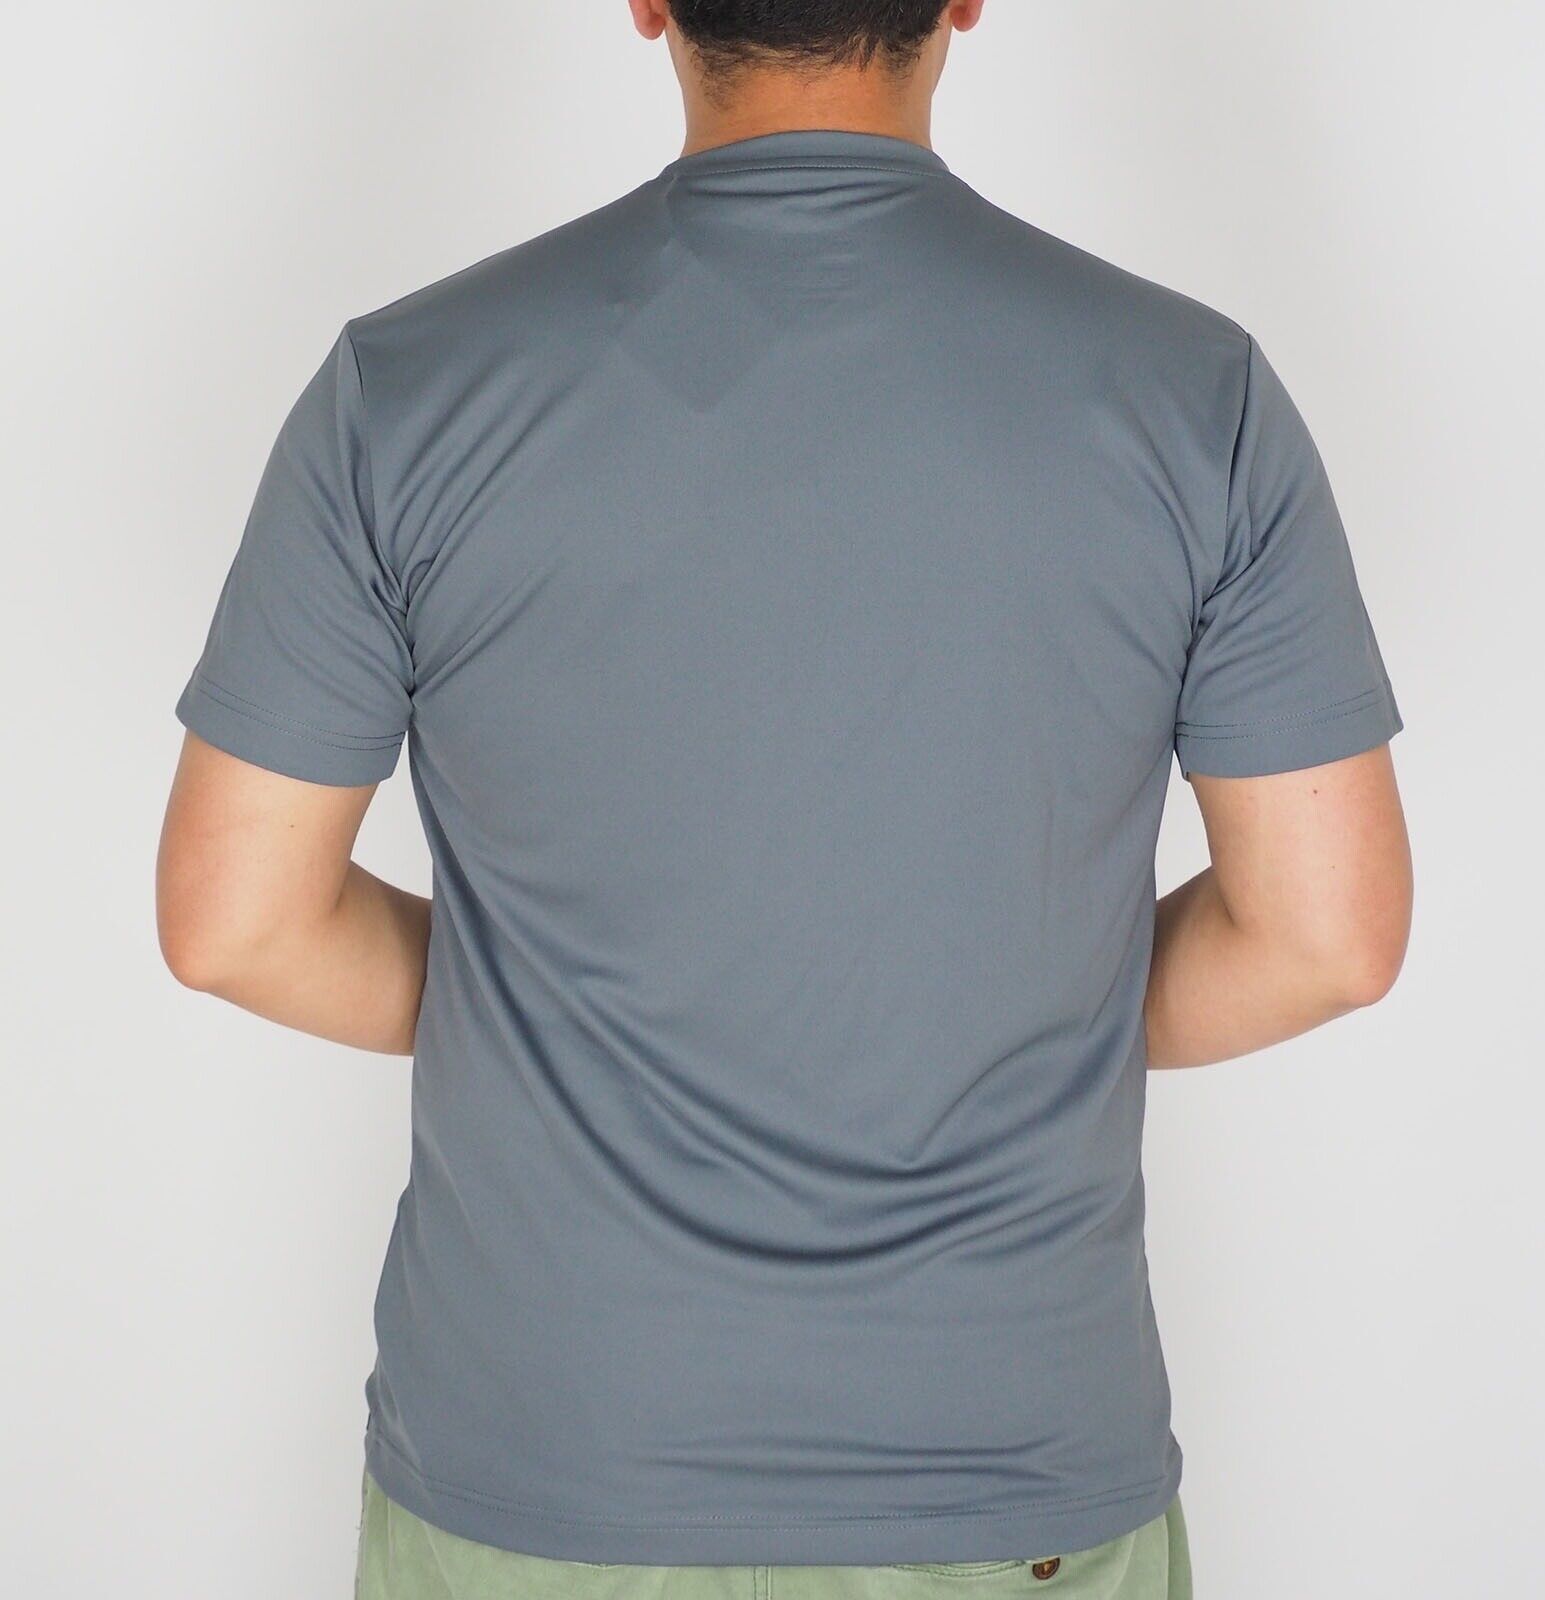 Mens Jack Wolfskin New Bas 5006291 Tarmac Grey Short Sleeve Asian Fit T Shirt - London Top Style